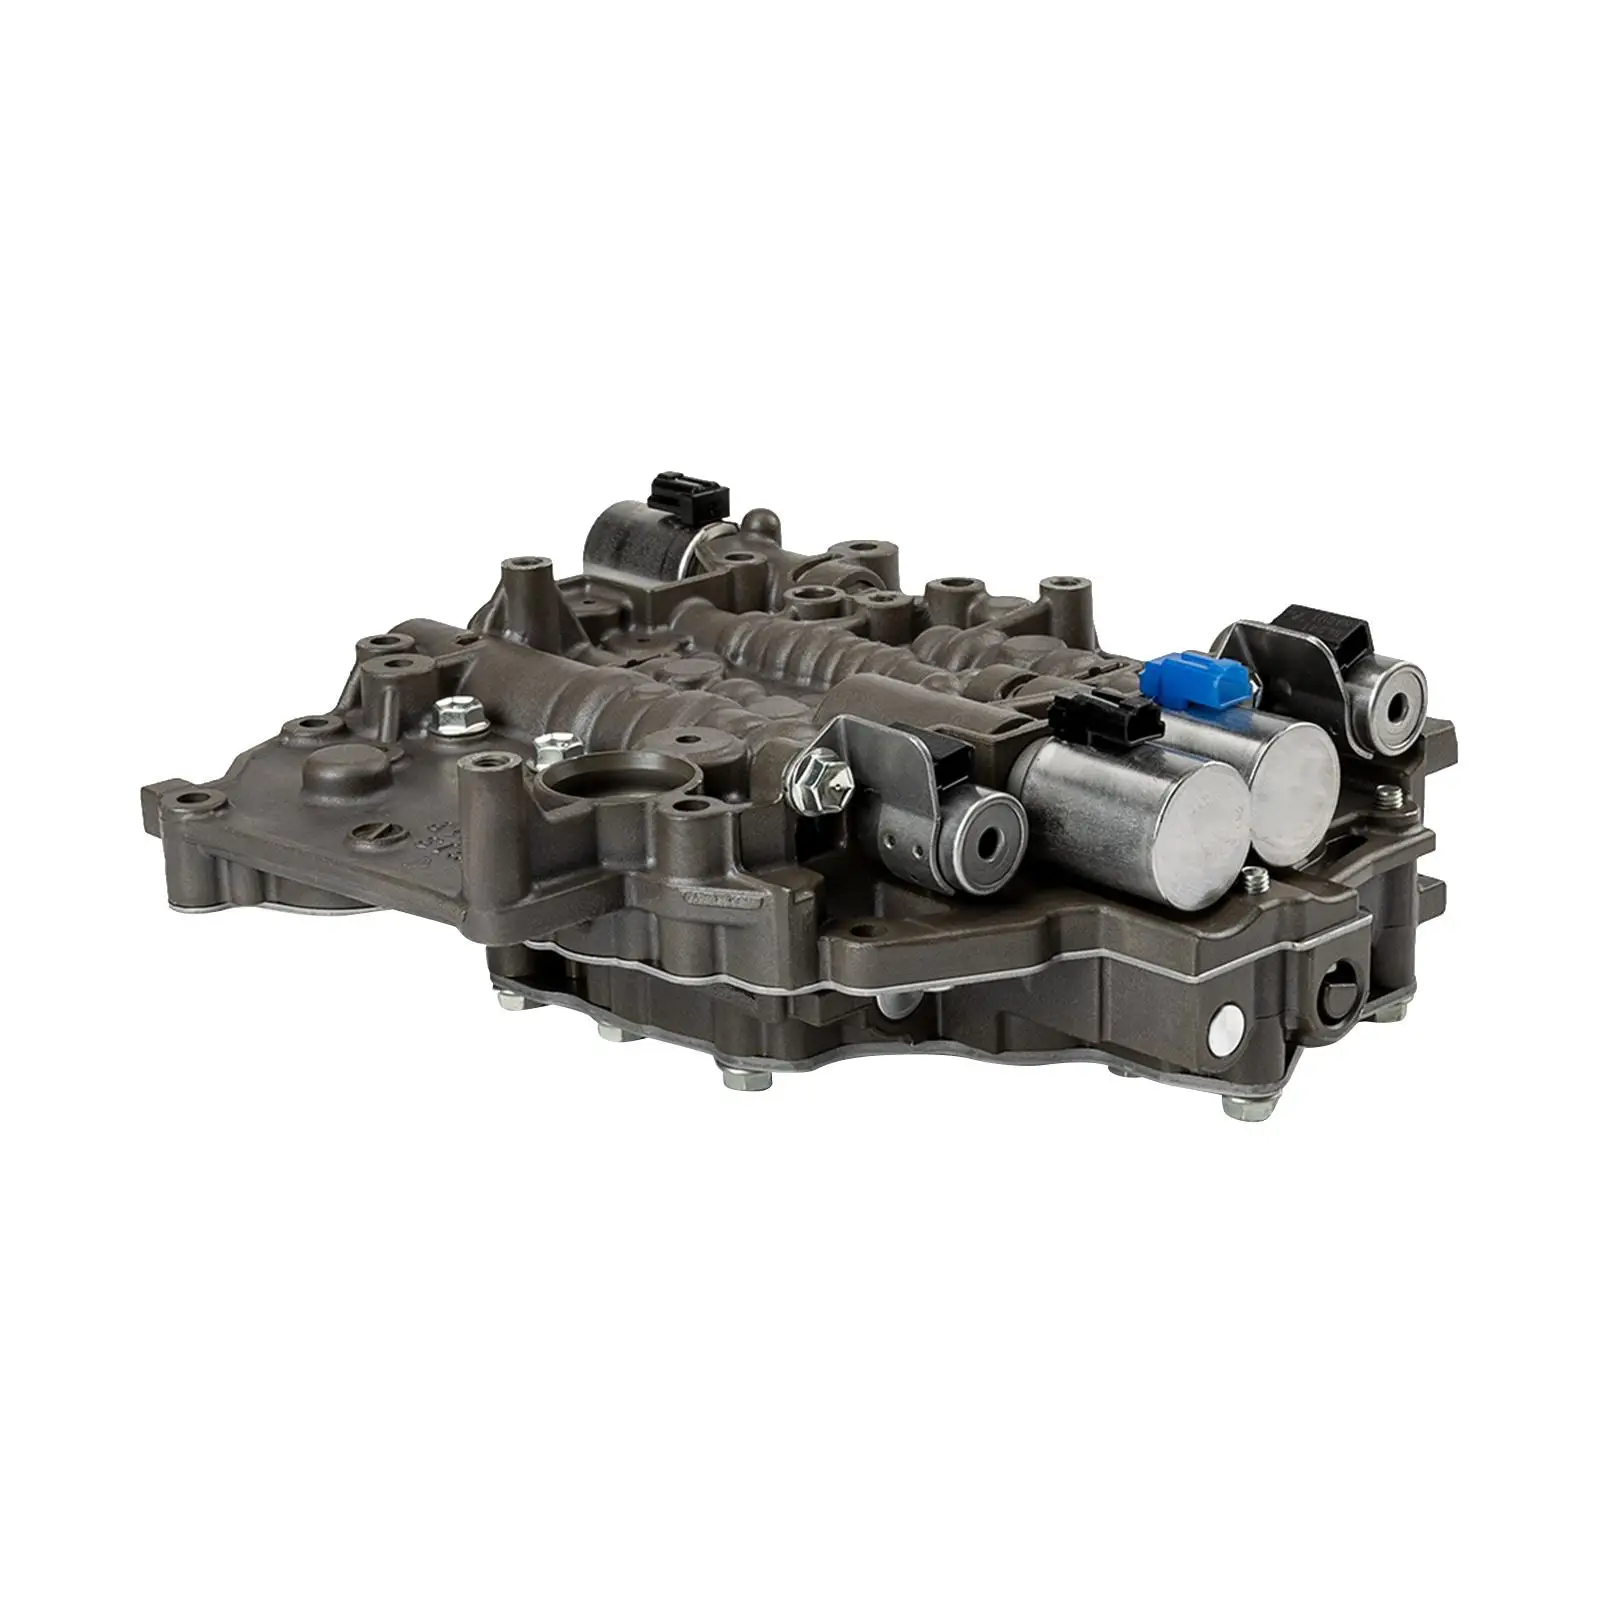 Automatic Transmission Gearbox Valve Body Cvt K313 for Toyota Auris1.2L